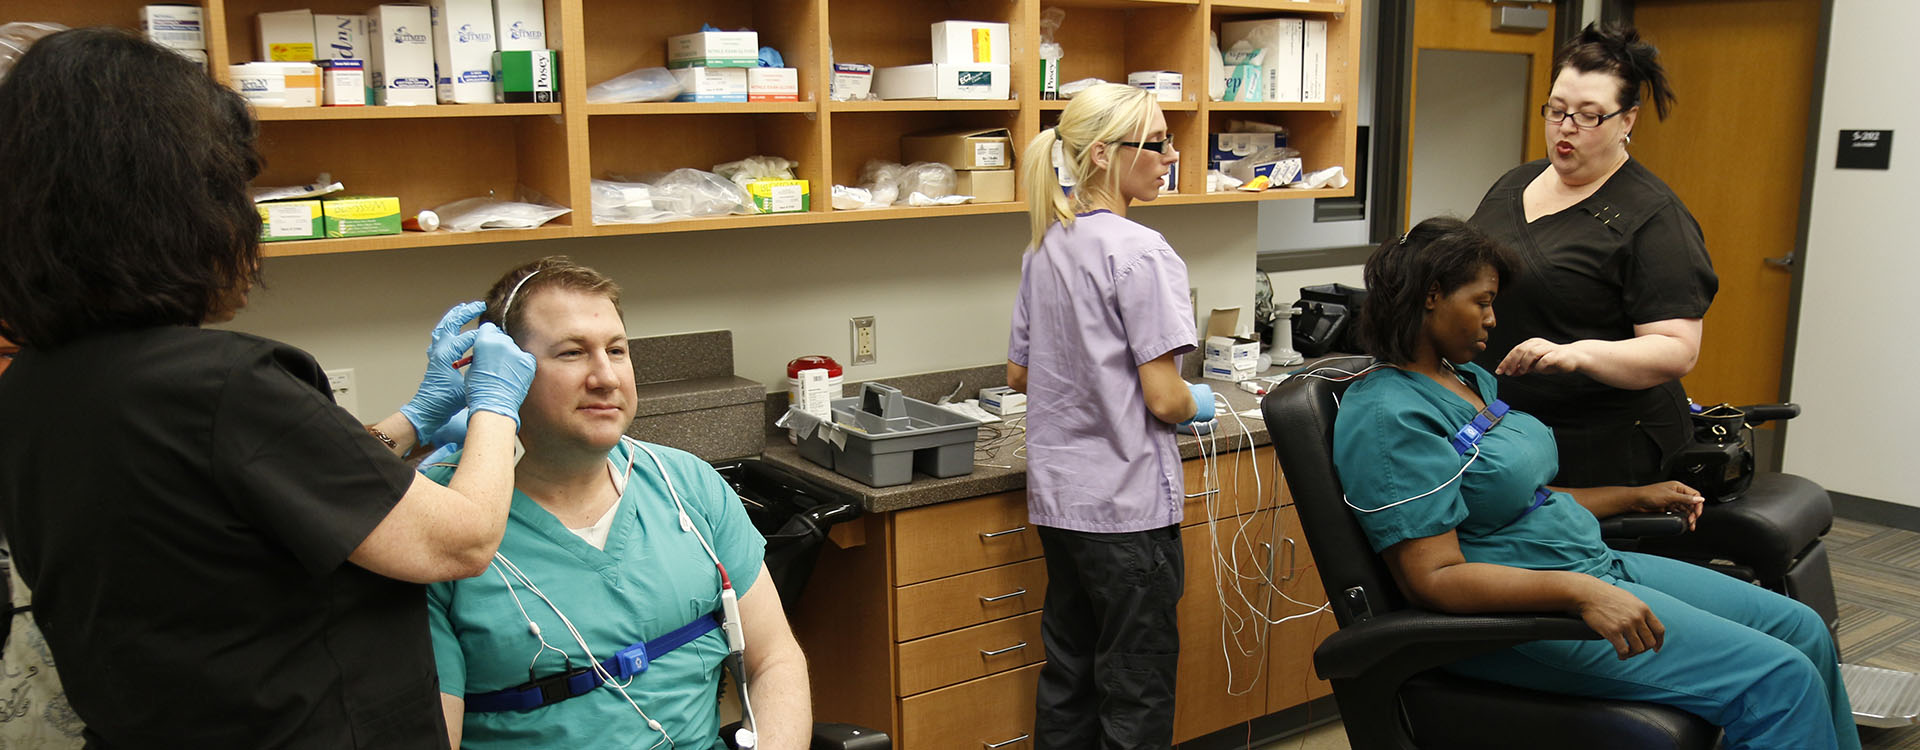 students applying diagnostic sensors to patients